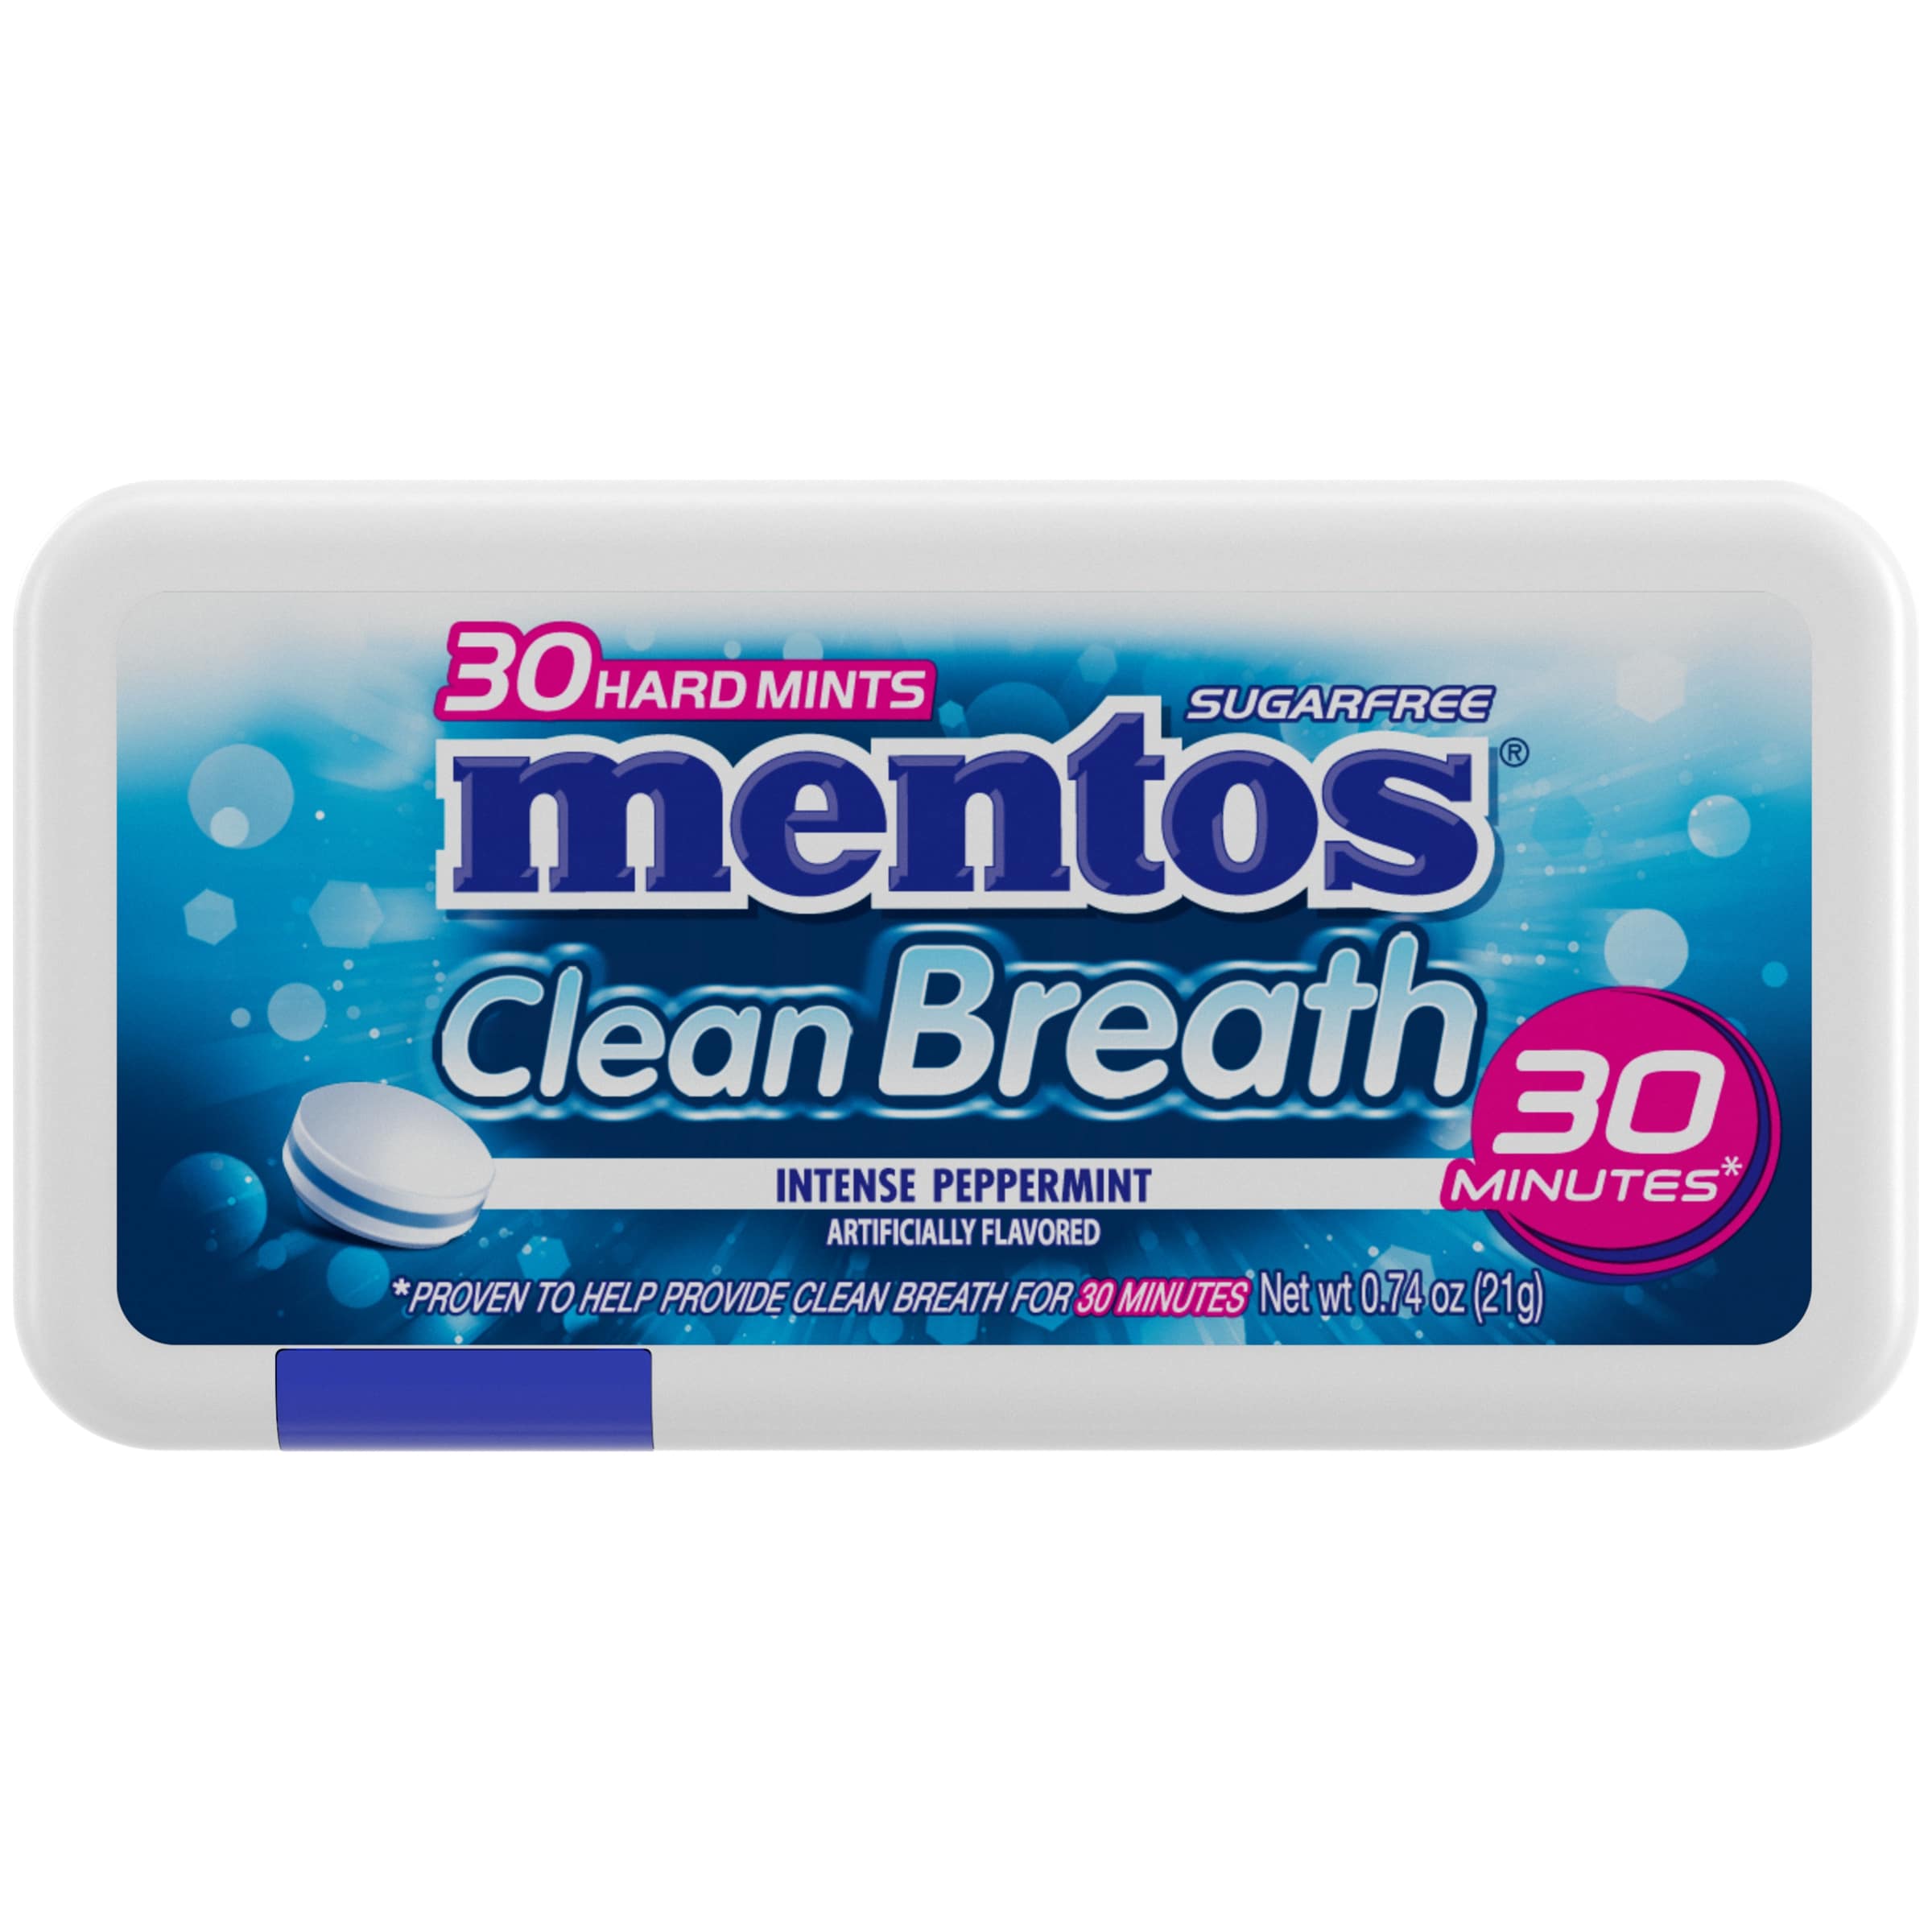 Mentos Clean Breath Hard Mints, Peppermint, 0.74 oz - image 1 of 6